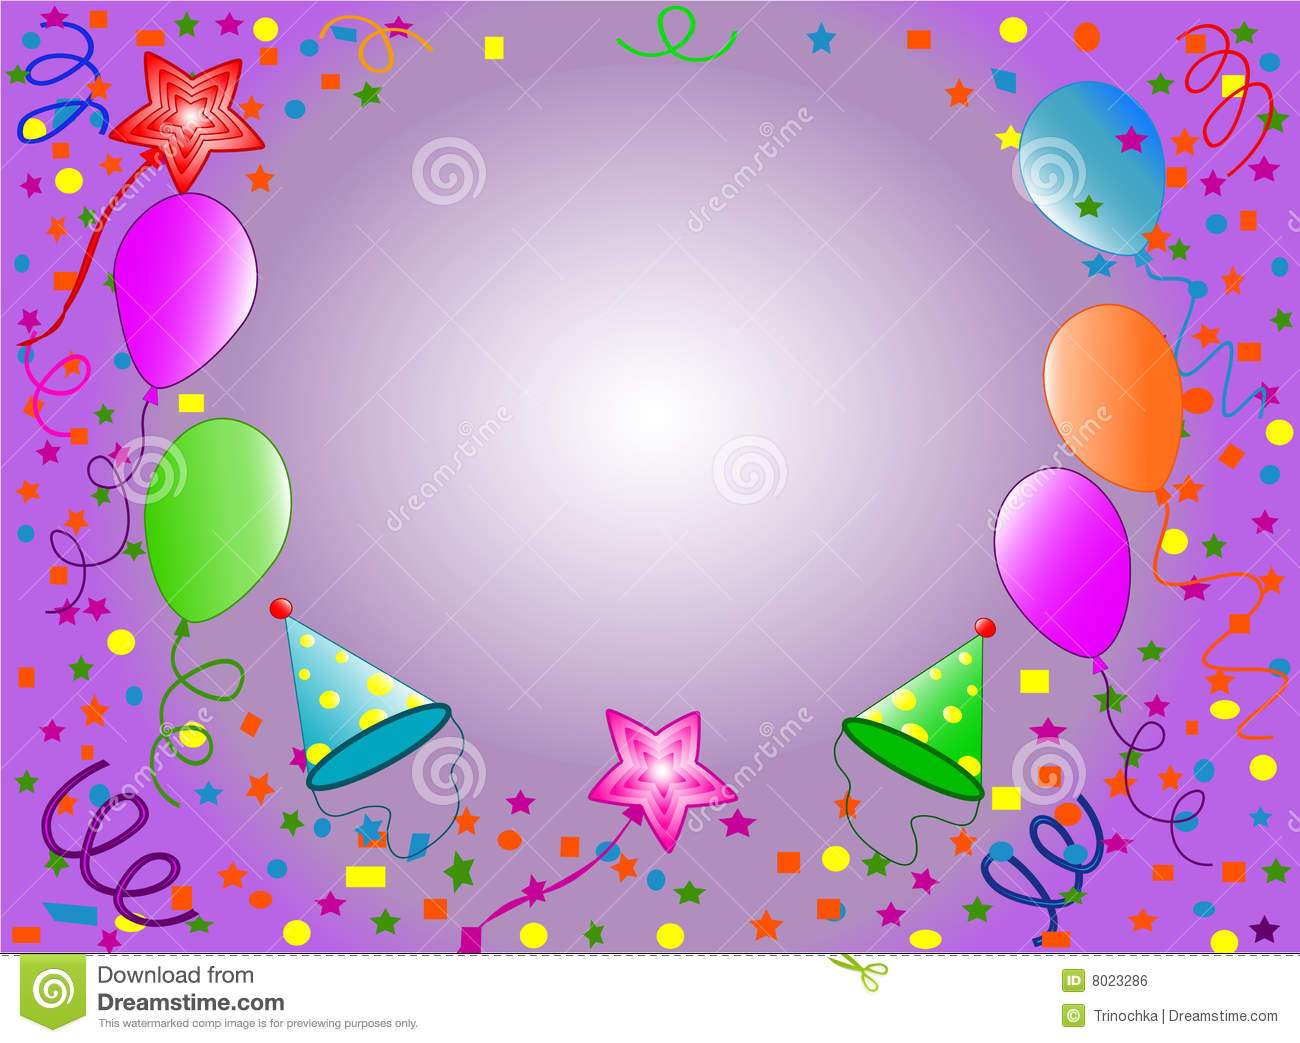 Happy Birthday Royalty Free Stock Image  Image 8023286 Clipart